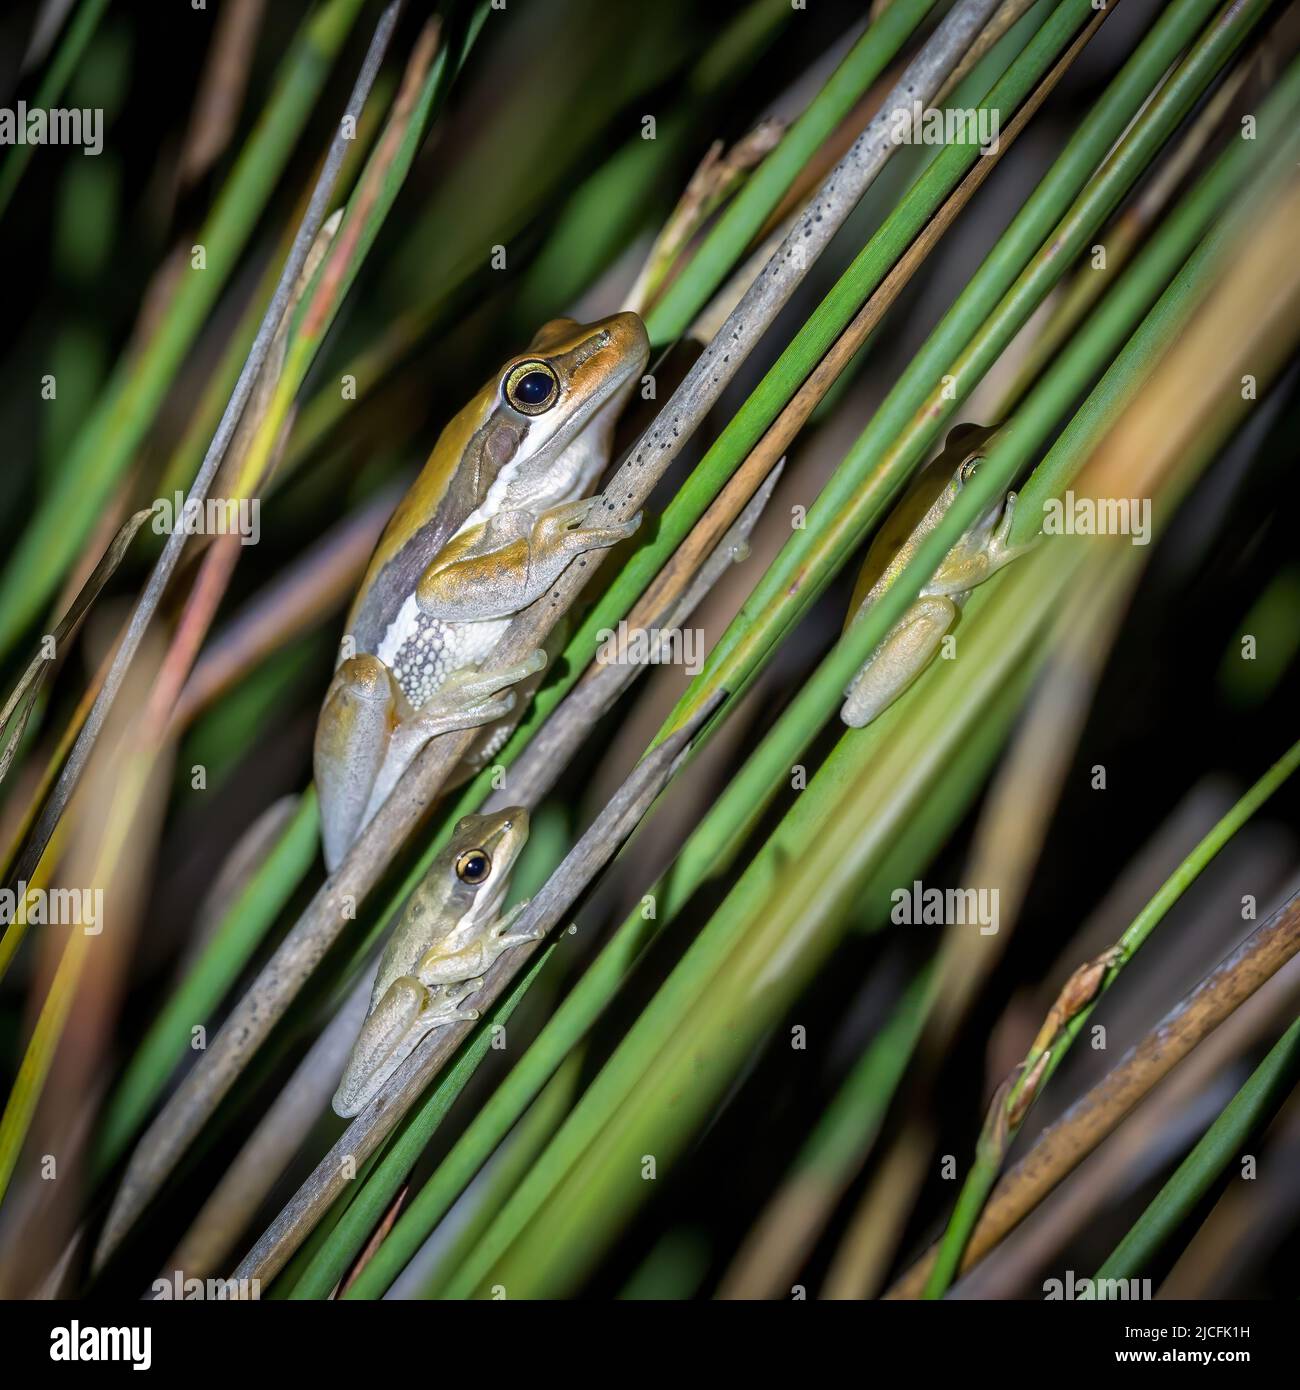 Three slender tree frogs on reeds Northclifffe, Western Australia Stock Photo